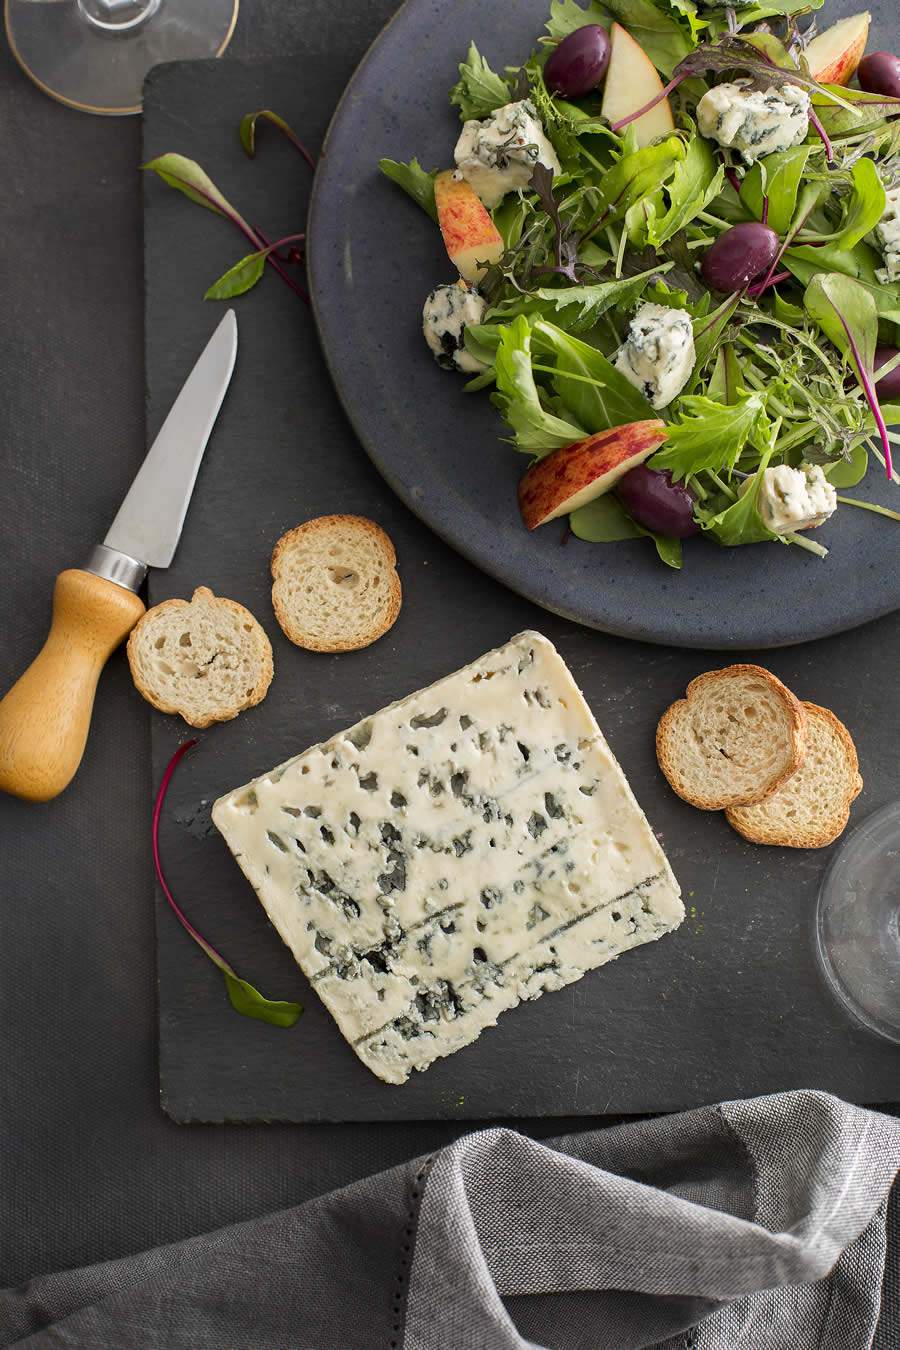 Descubra o corte perfeito: como a arte do corte influencia no sabor e na experiência dos queijos